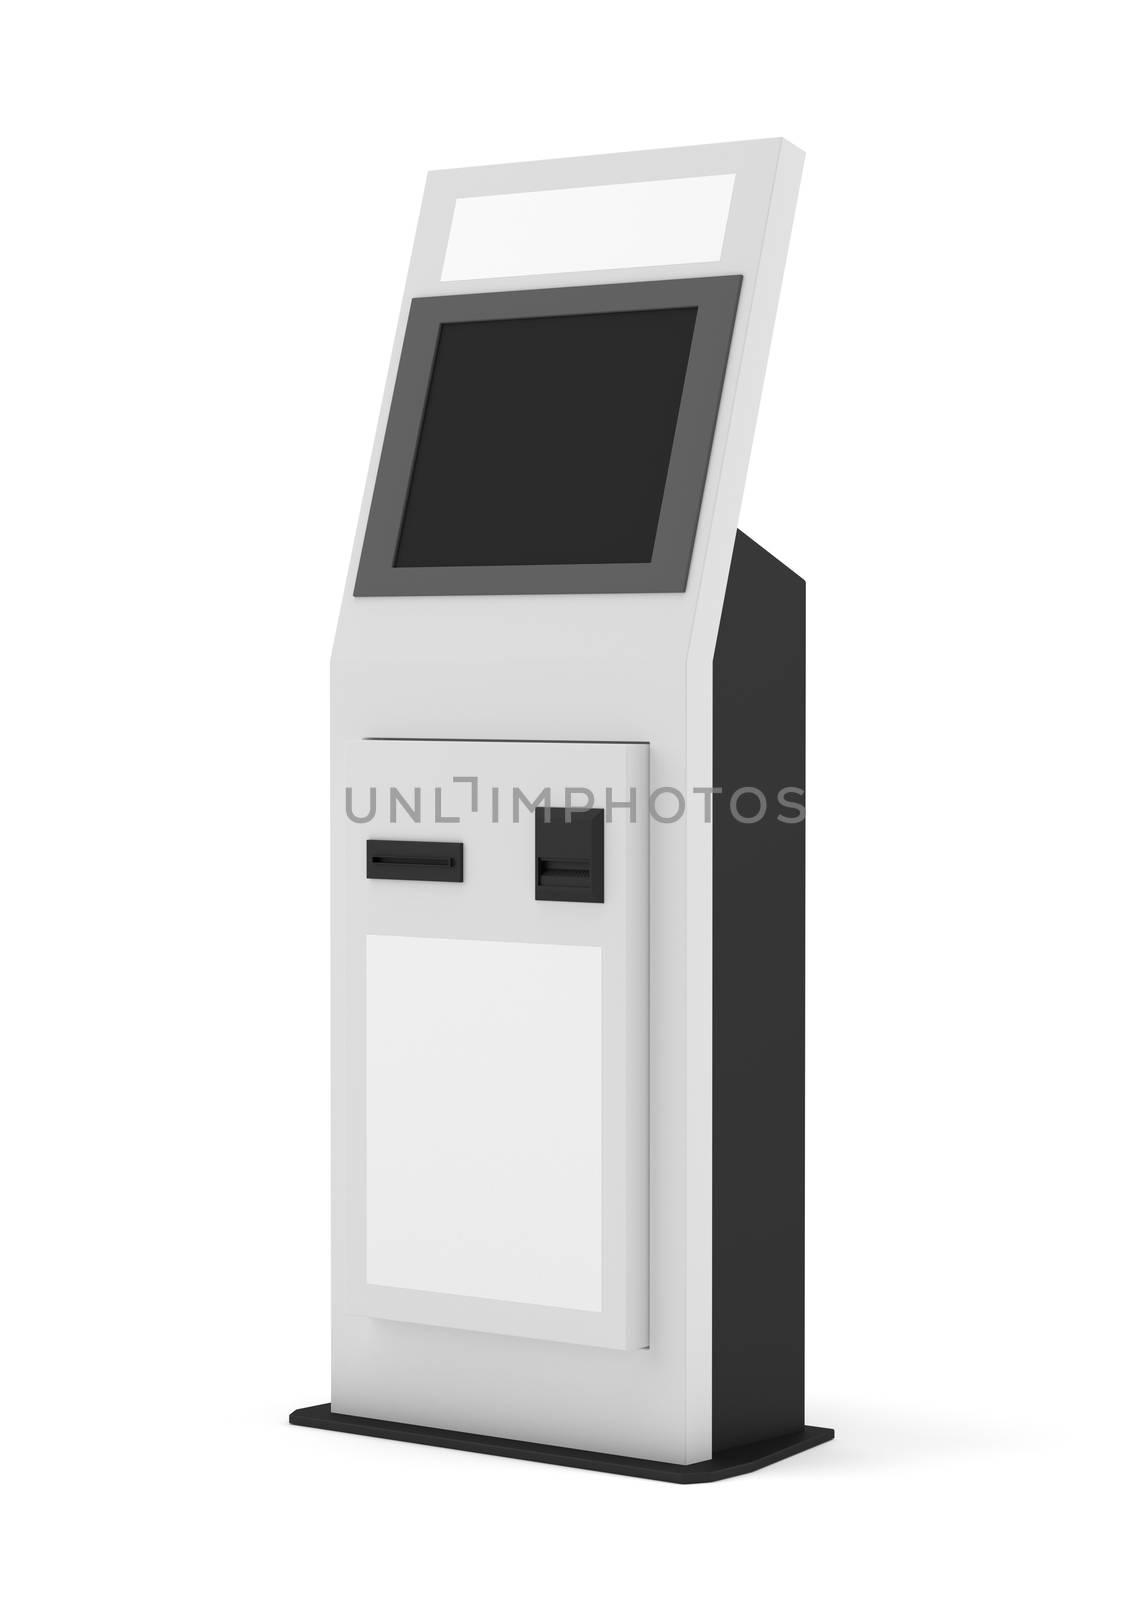 Digital touchscreen terminal by cherezoff